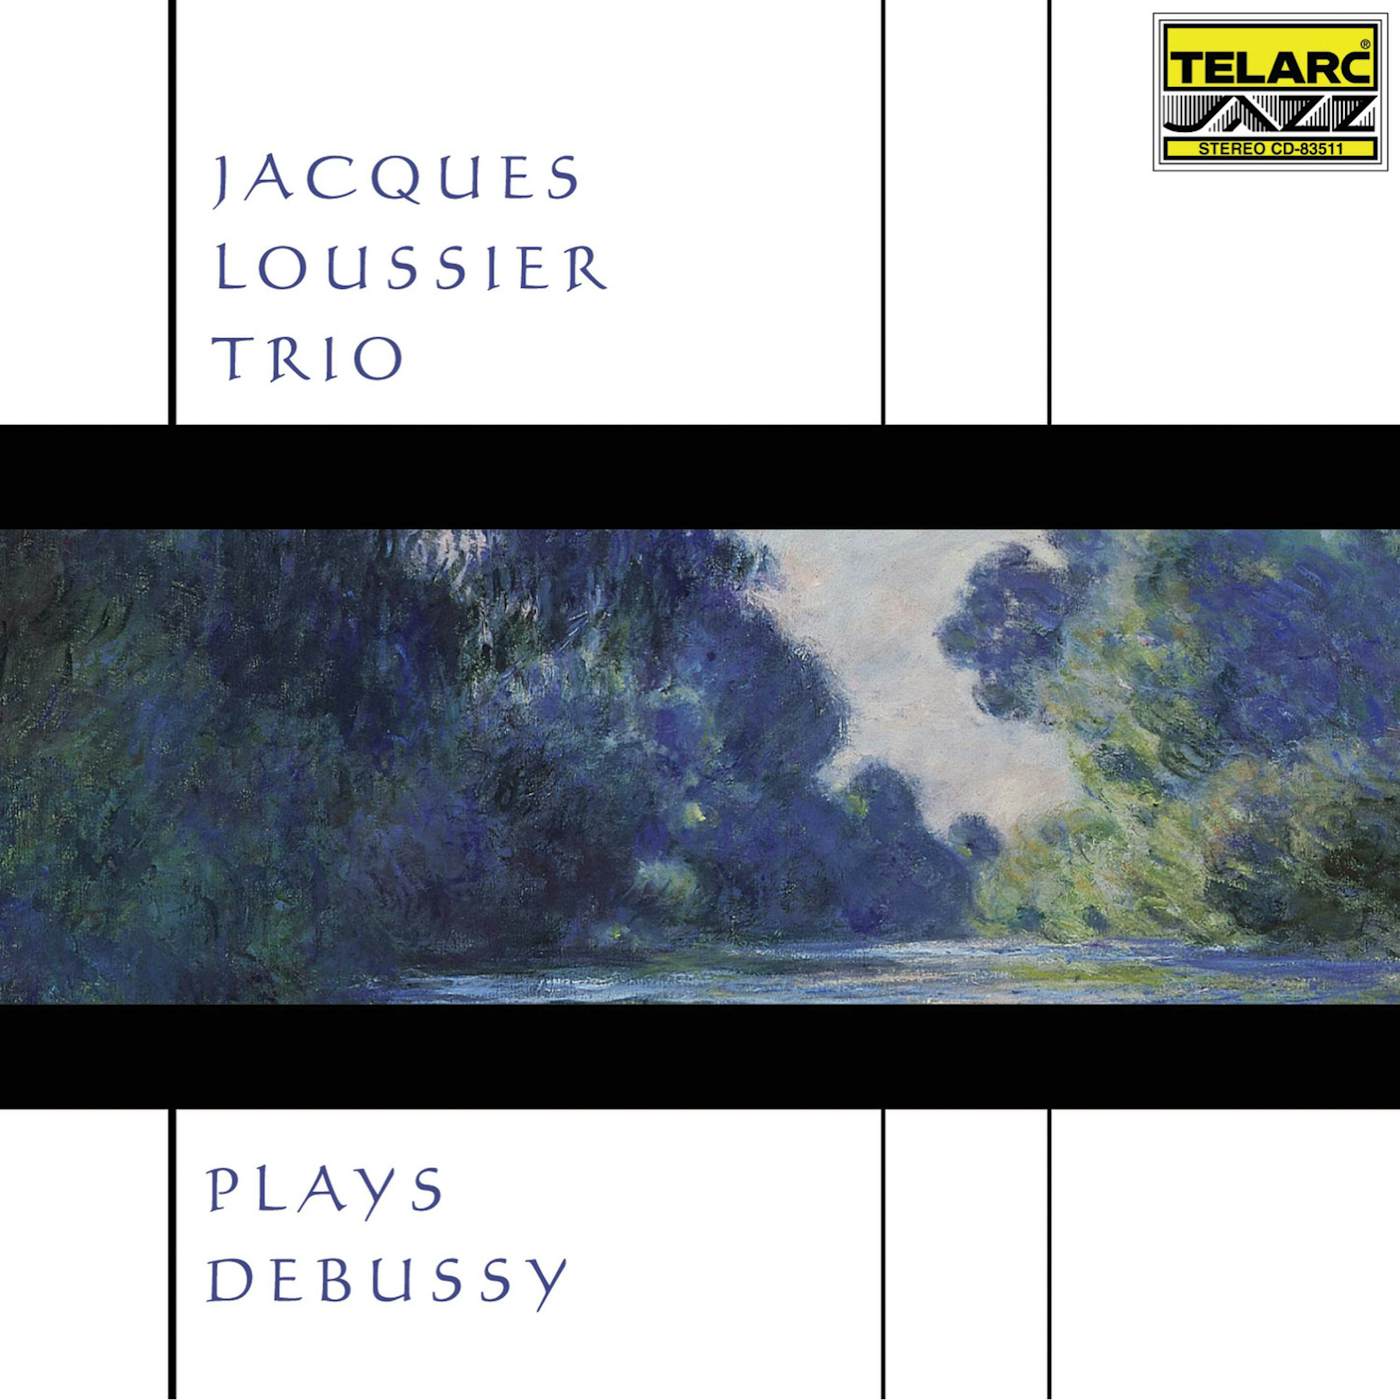 Jacques Loussier Trio Plays Debussy CD